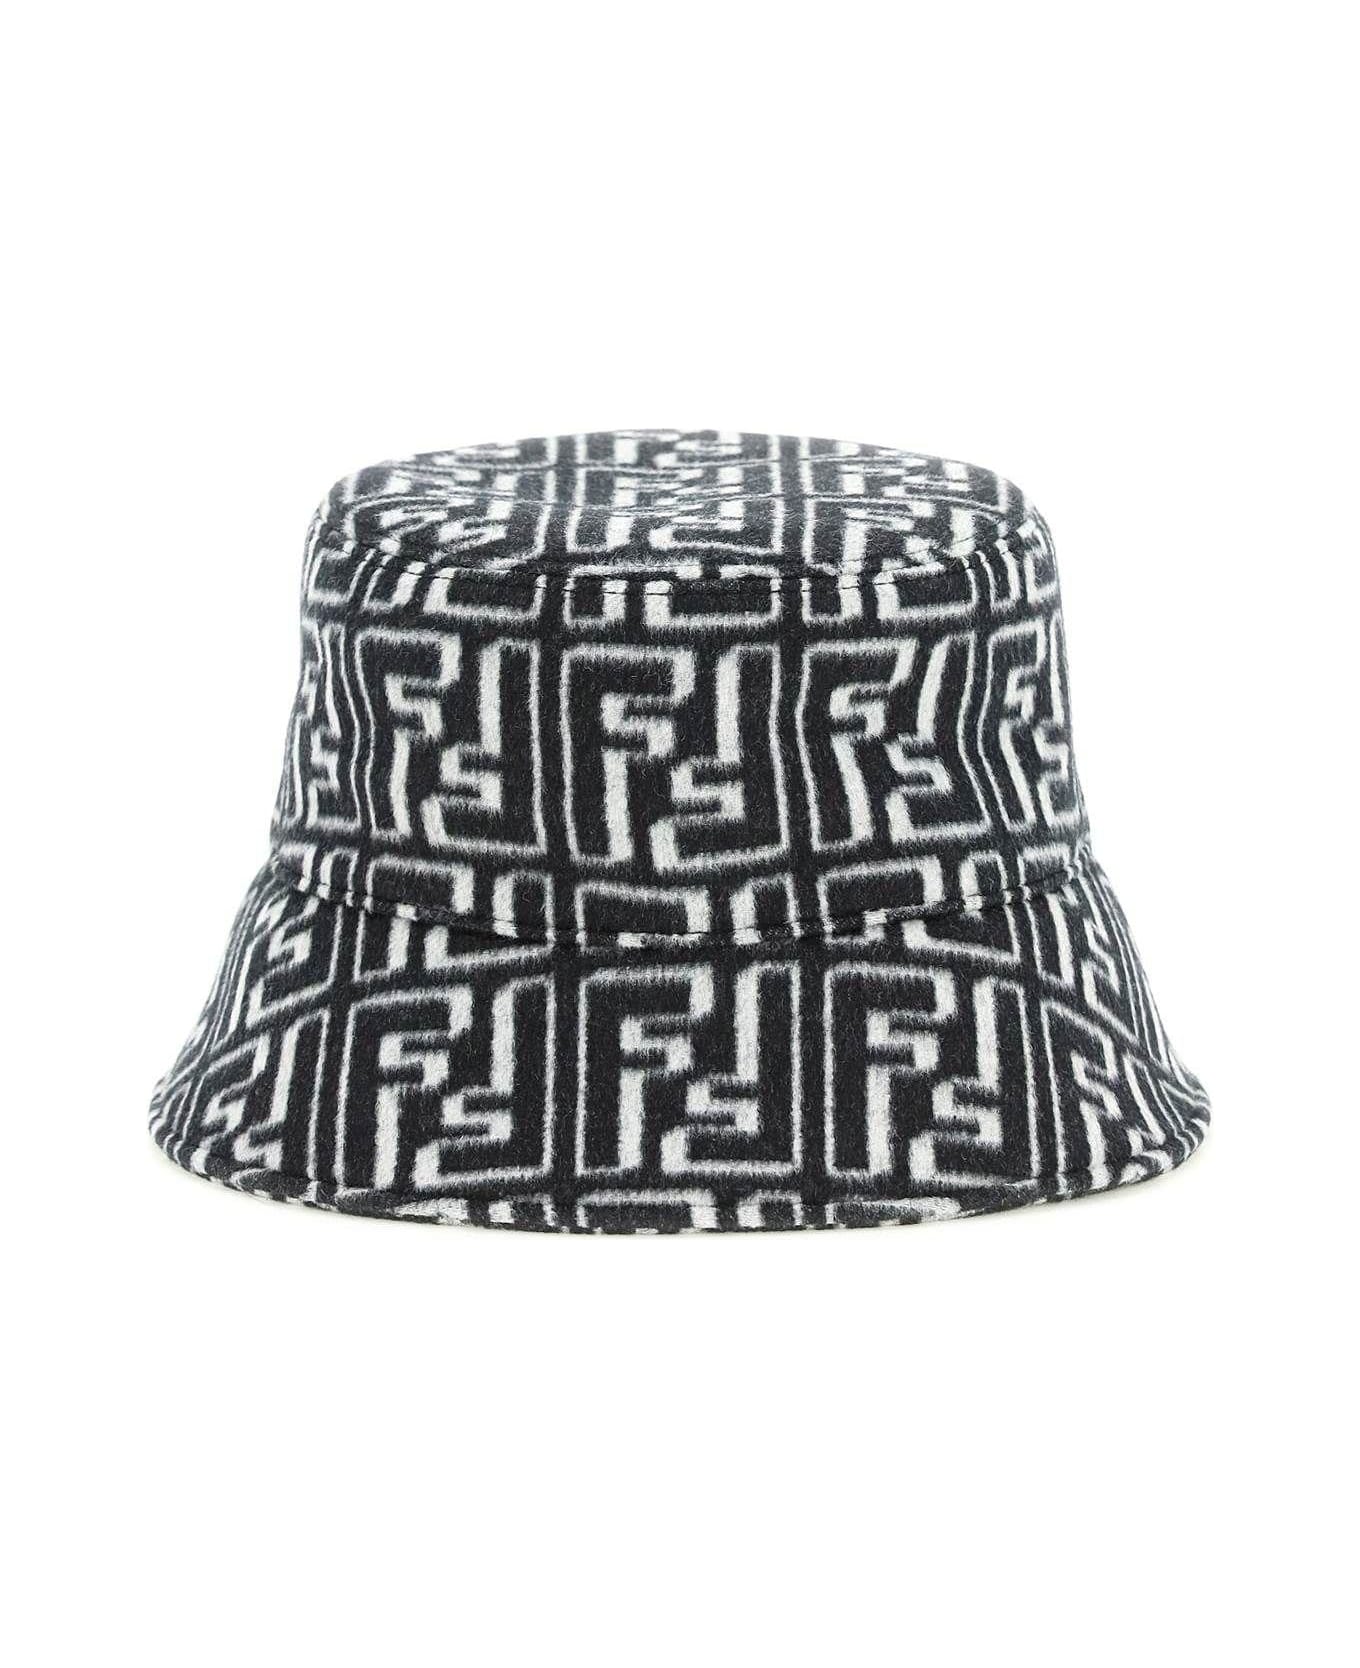 Fendi Jacquard Wool Bucket Hat - Black, white 帽子